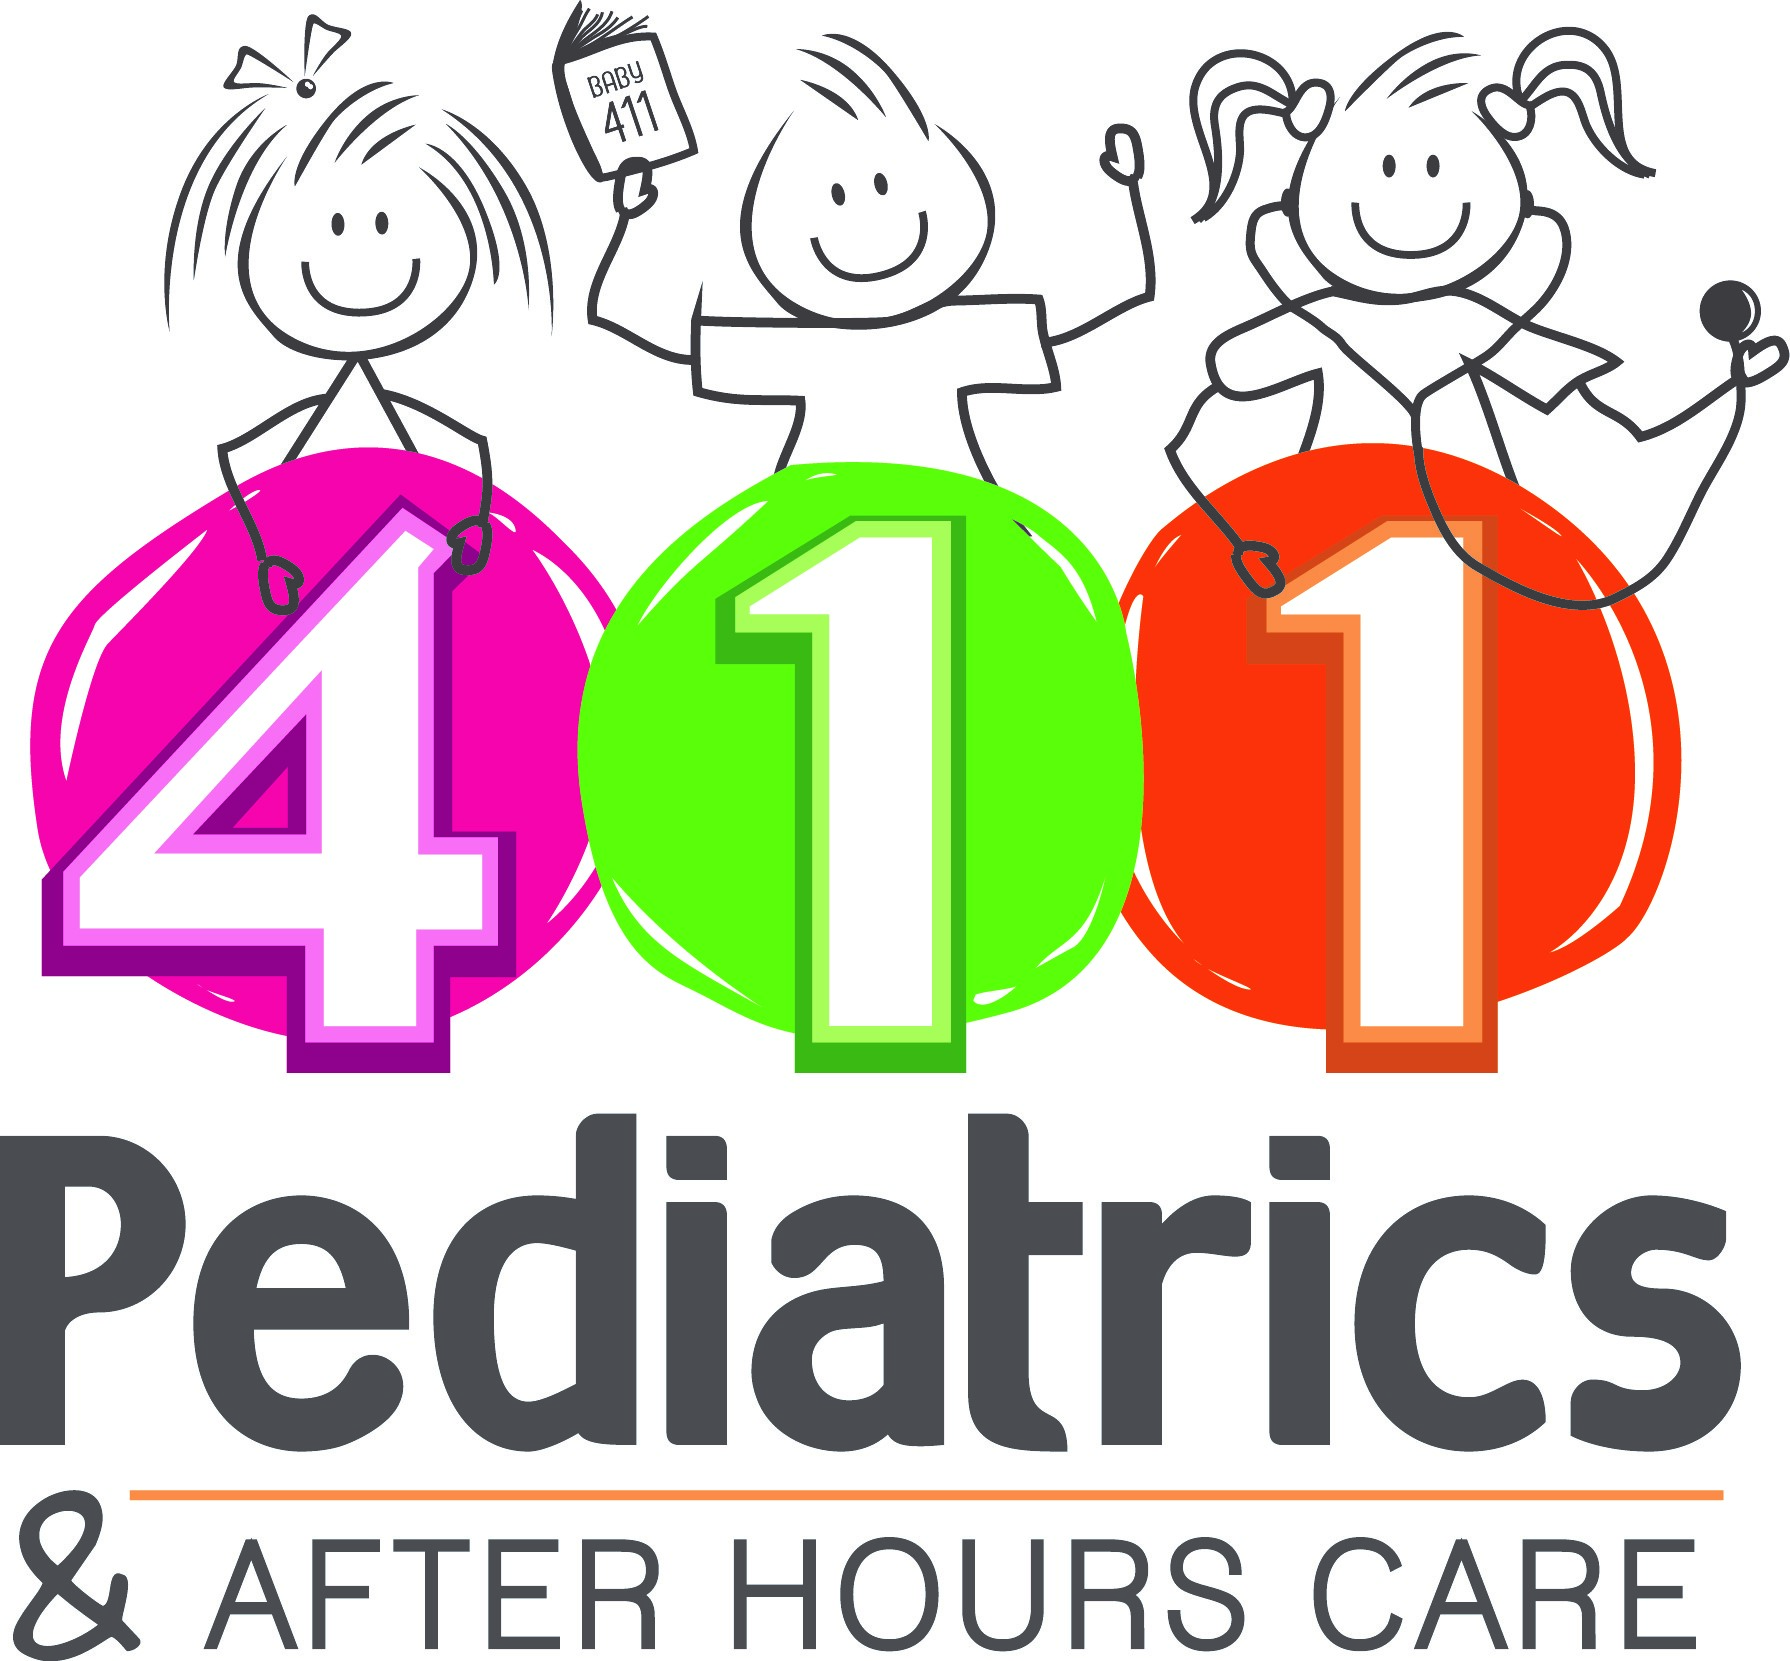 411 Pediatrics